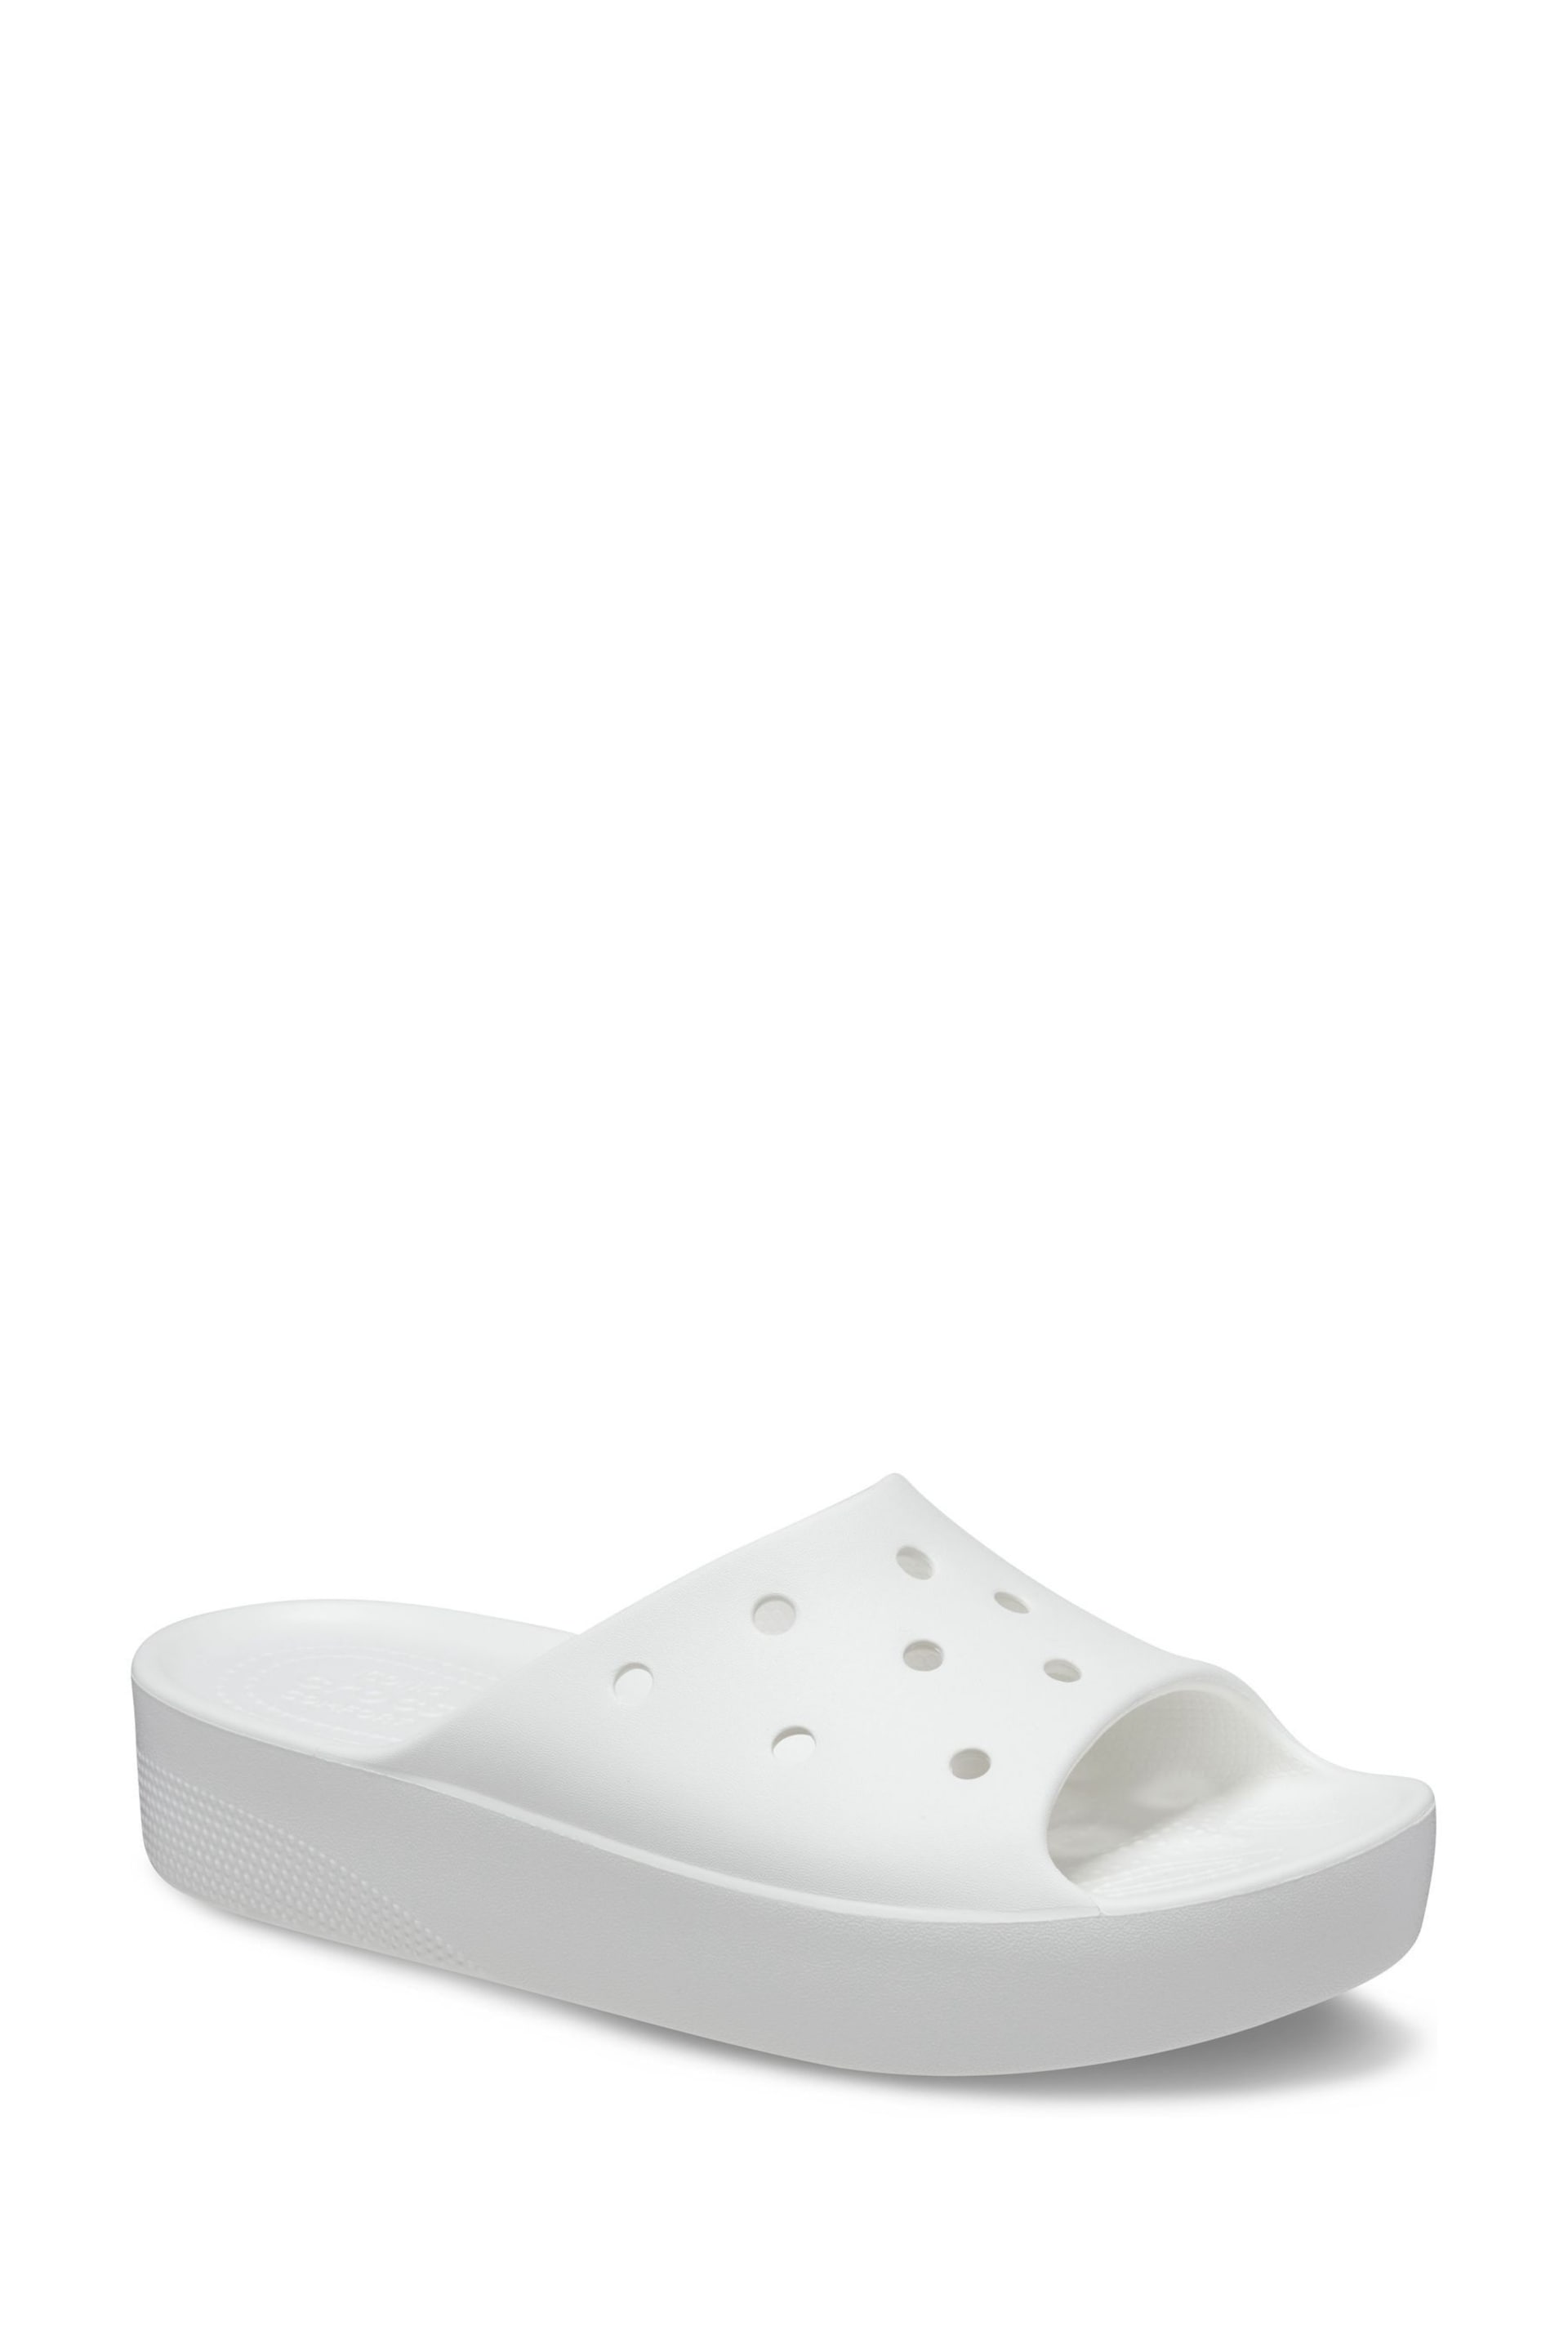 Crocs Classic Platform Slide Sandals - Image 5 of 7